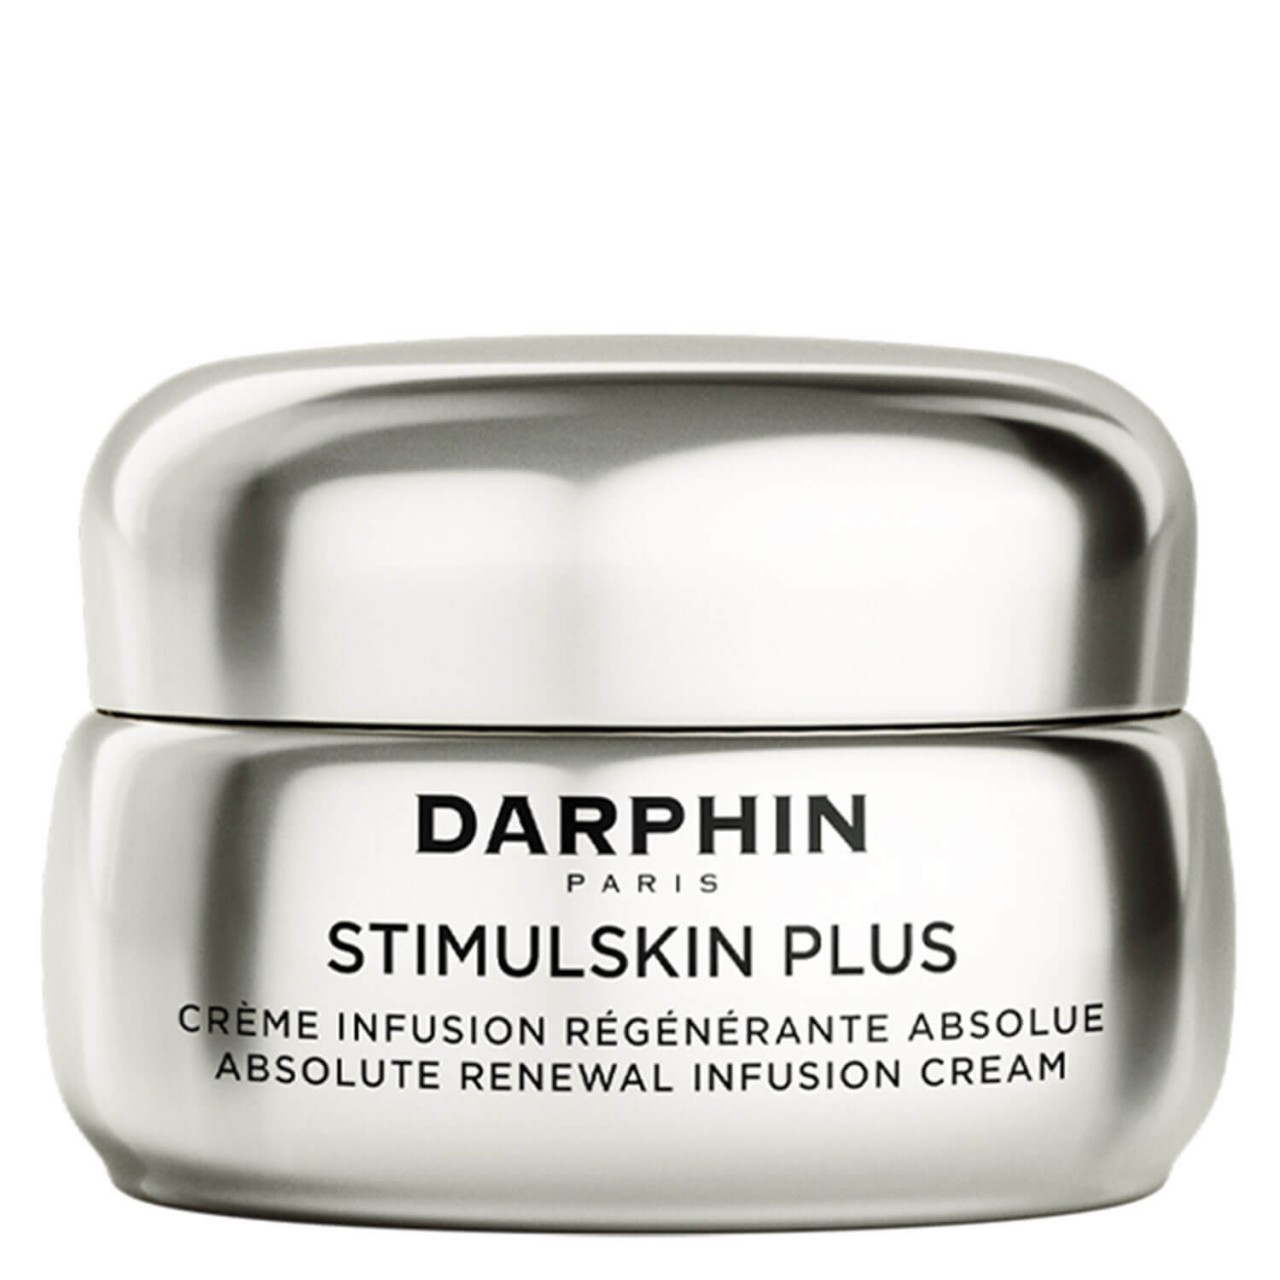 STIMULSKIN PLUS - Absolute Renewal Infusion Cream Normal to Combination Skin von Darphin